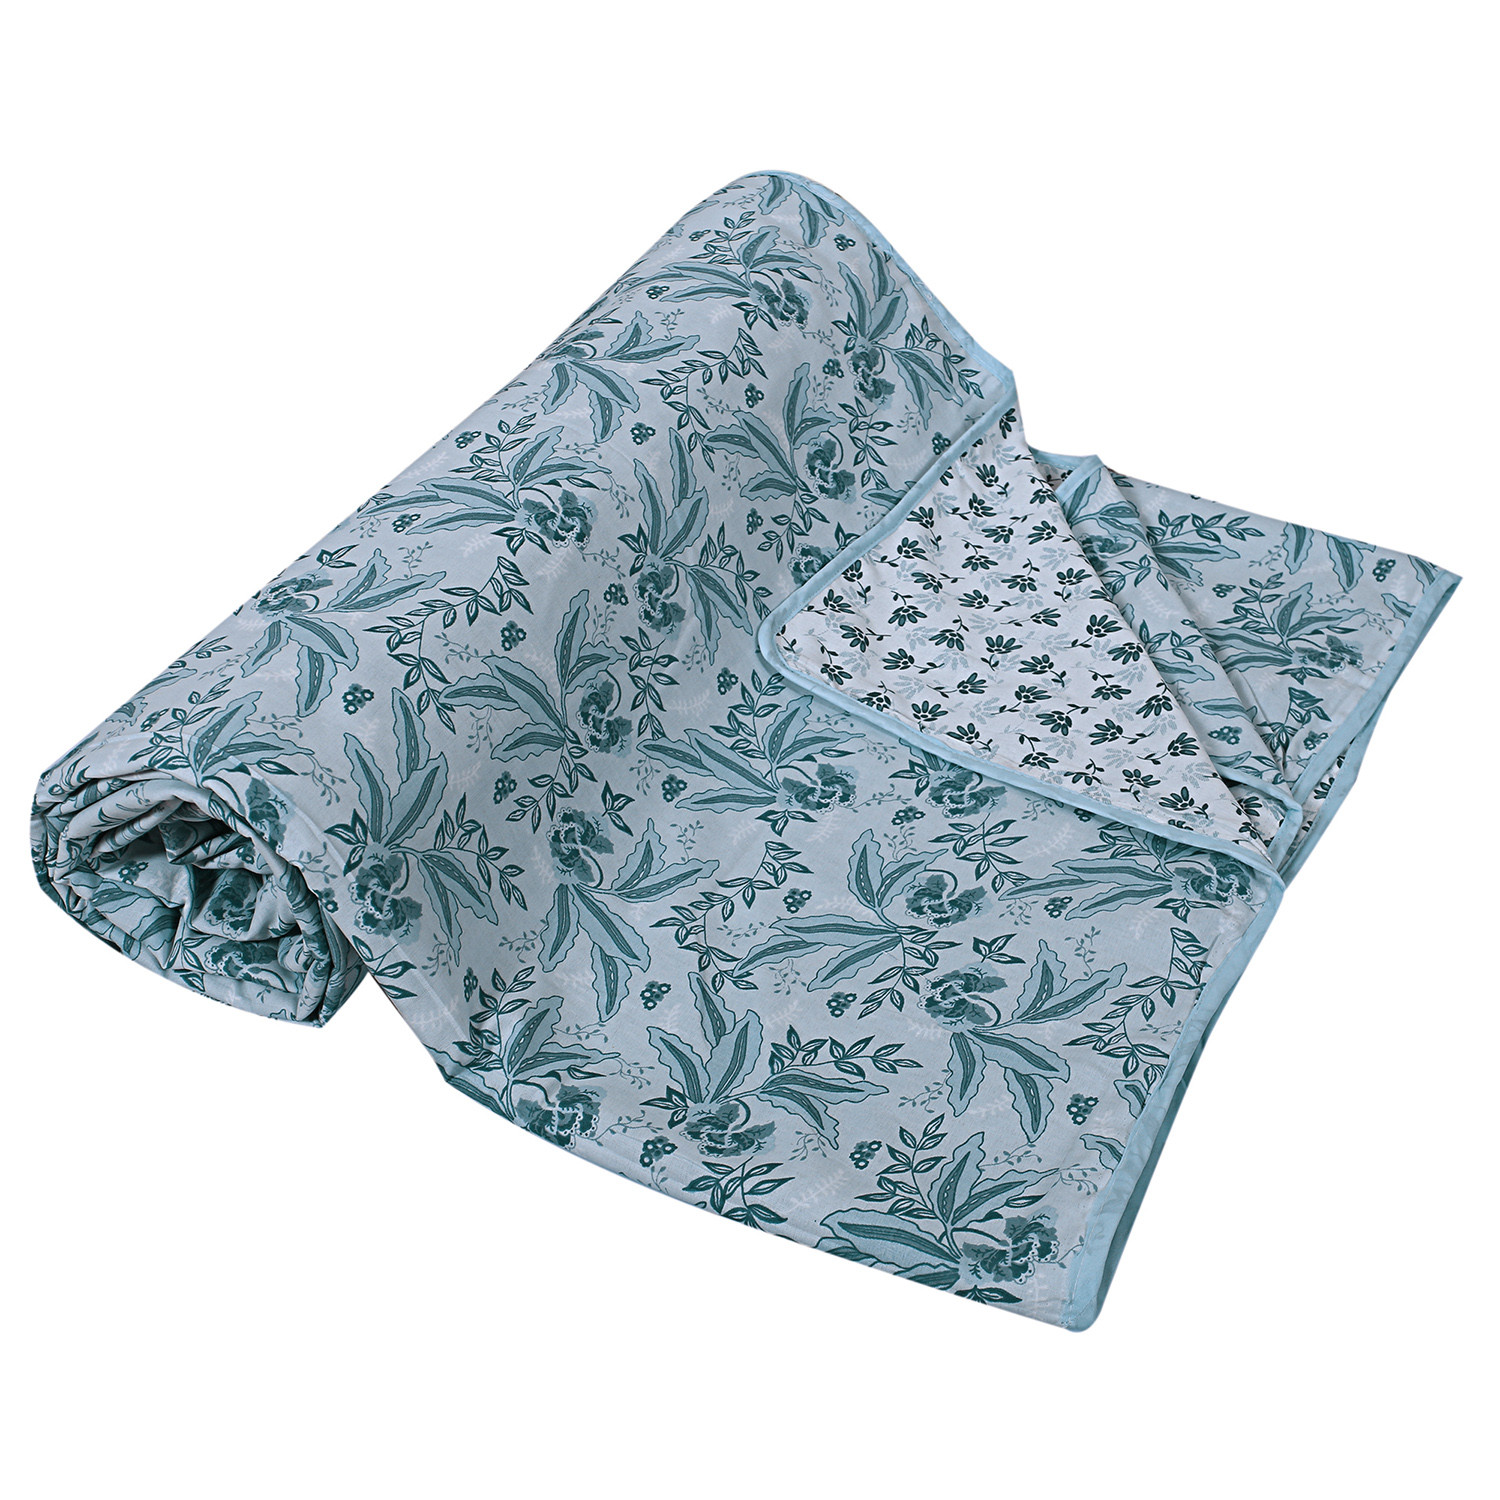 Kuber Industries Cotton Soft Lightweight Tropical Plant Design Reversible Single Bed Dohar | Blanket | AC Quilt for Home & Travel (Sky Blue)